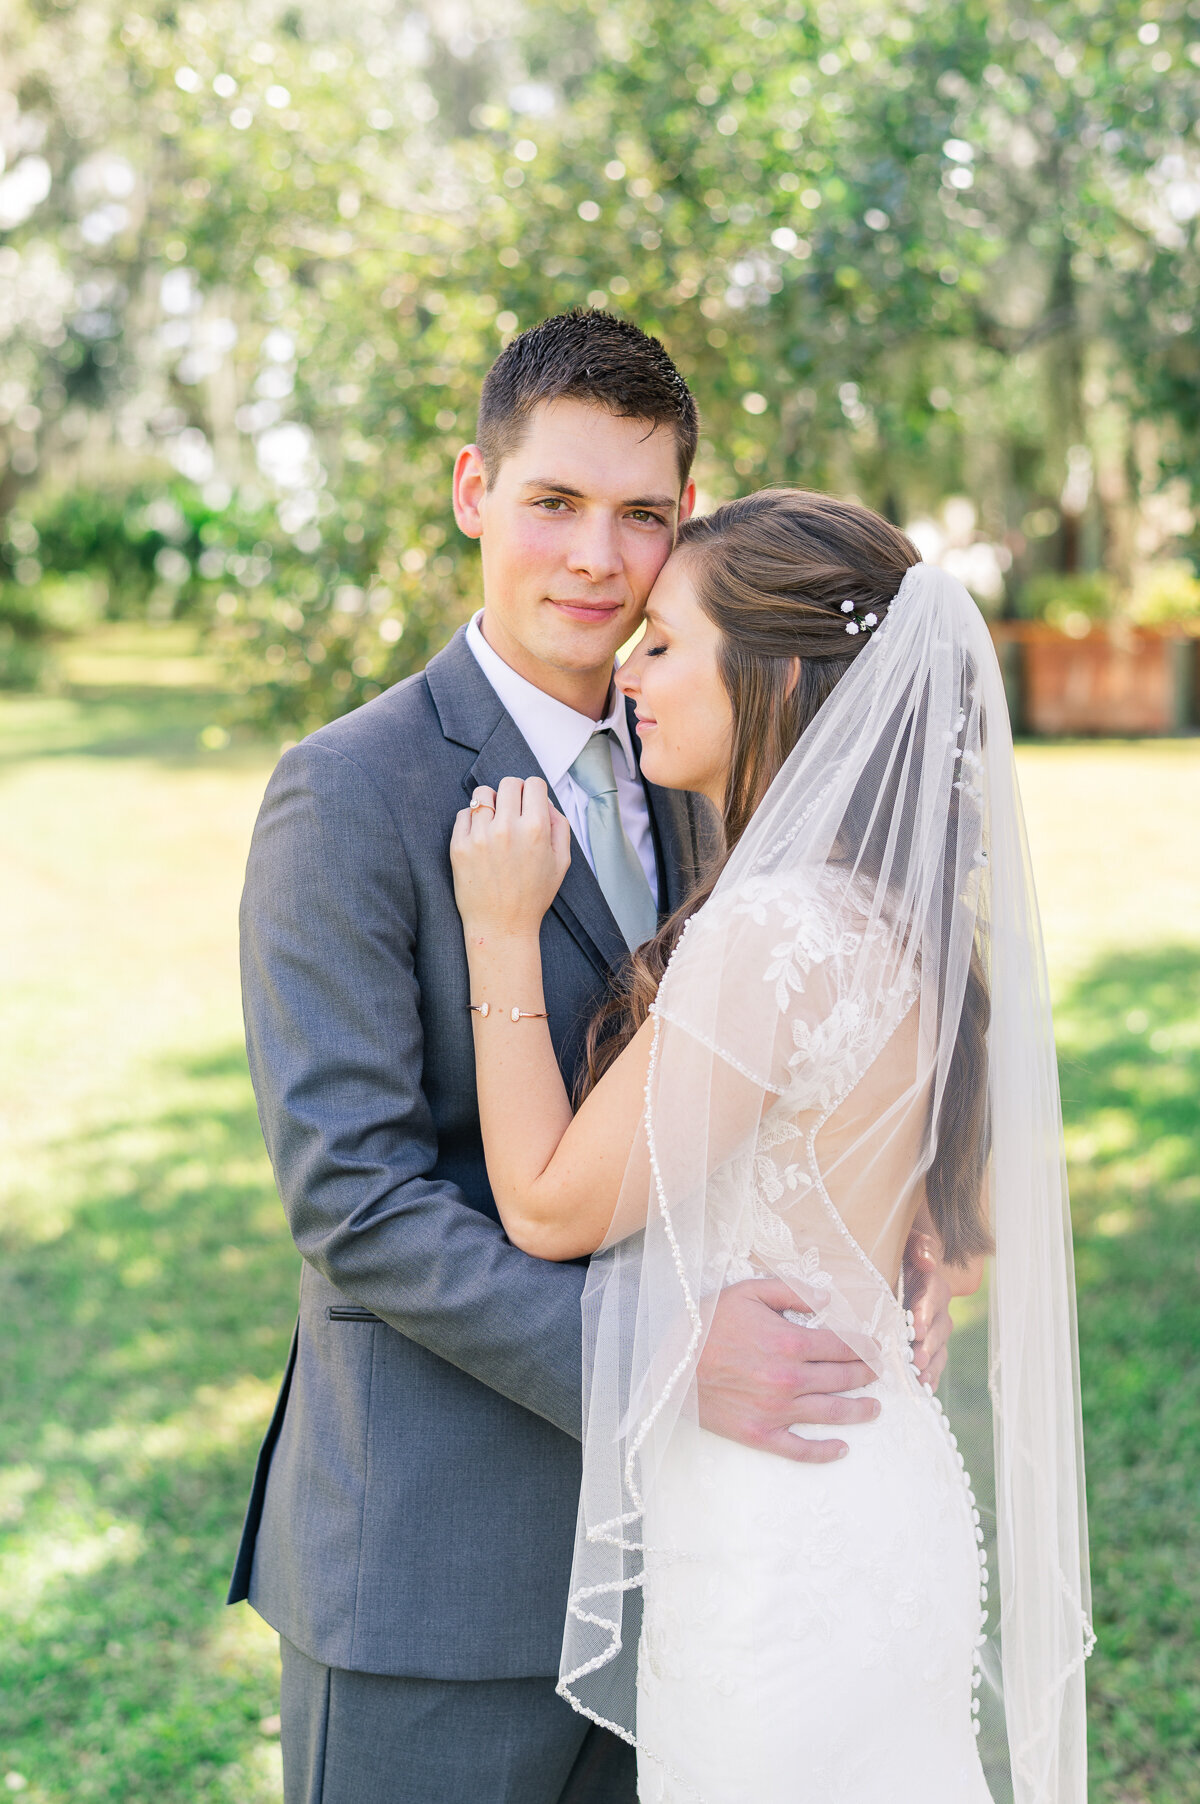 Caroline & Phillip Up the Creek Farms Wedding Couples Portrait | Lisa Marshall Photography